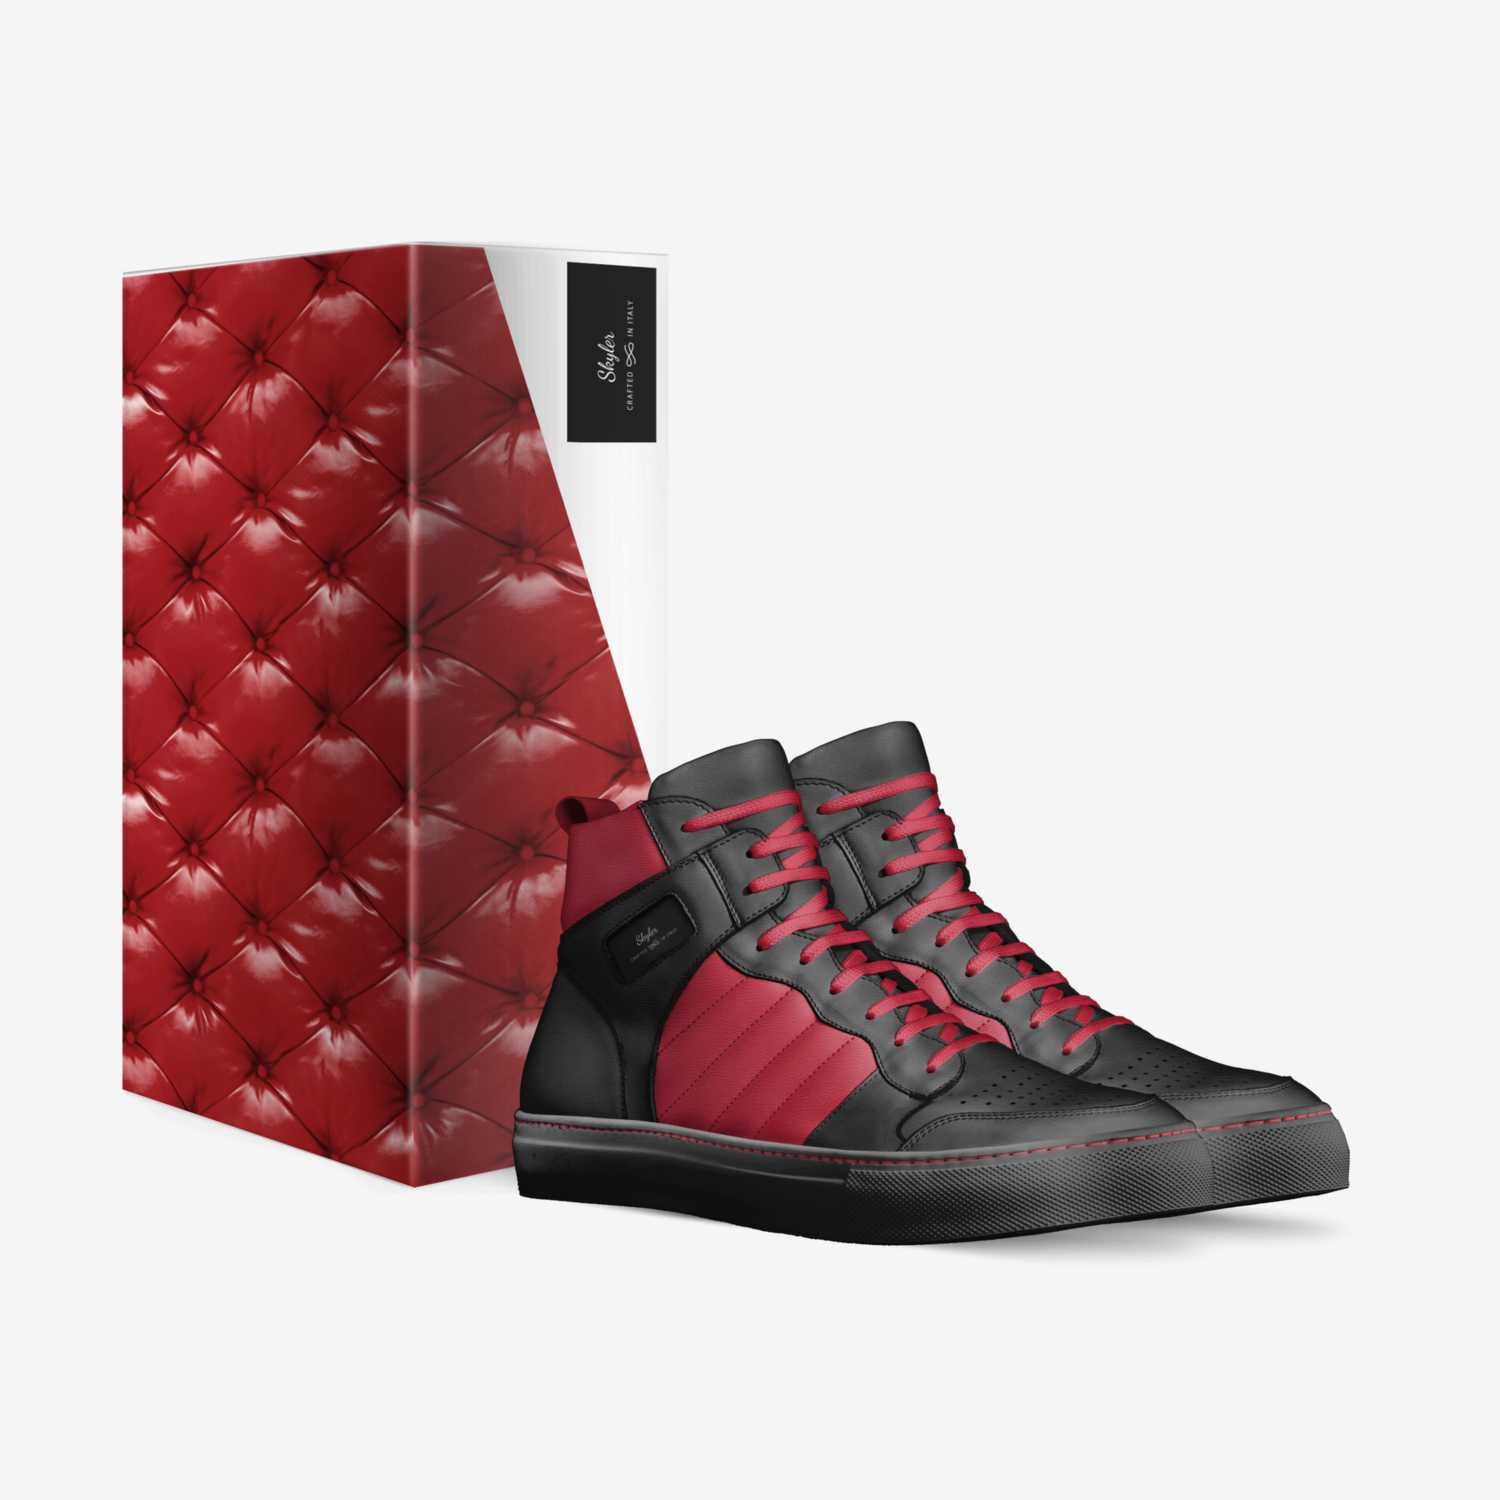 Skyler  custom made in Italy shoes by Skyler | Box view